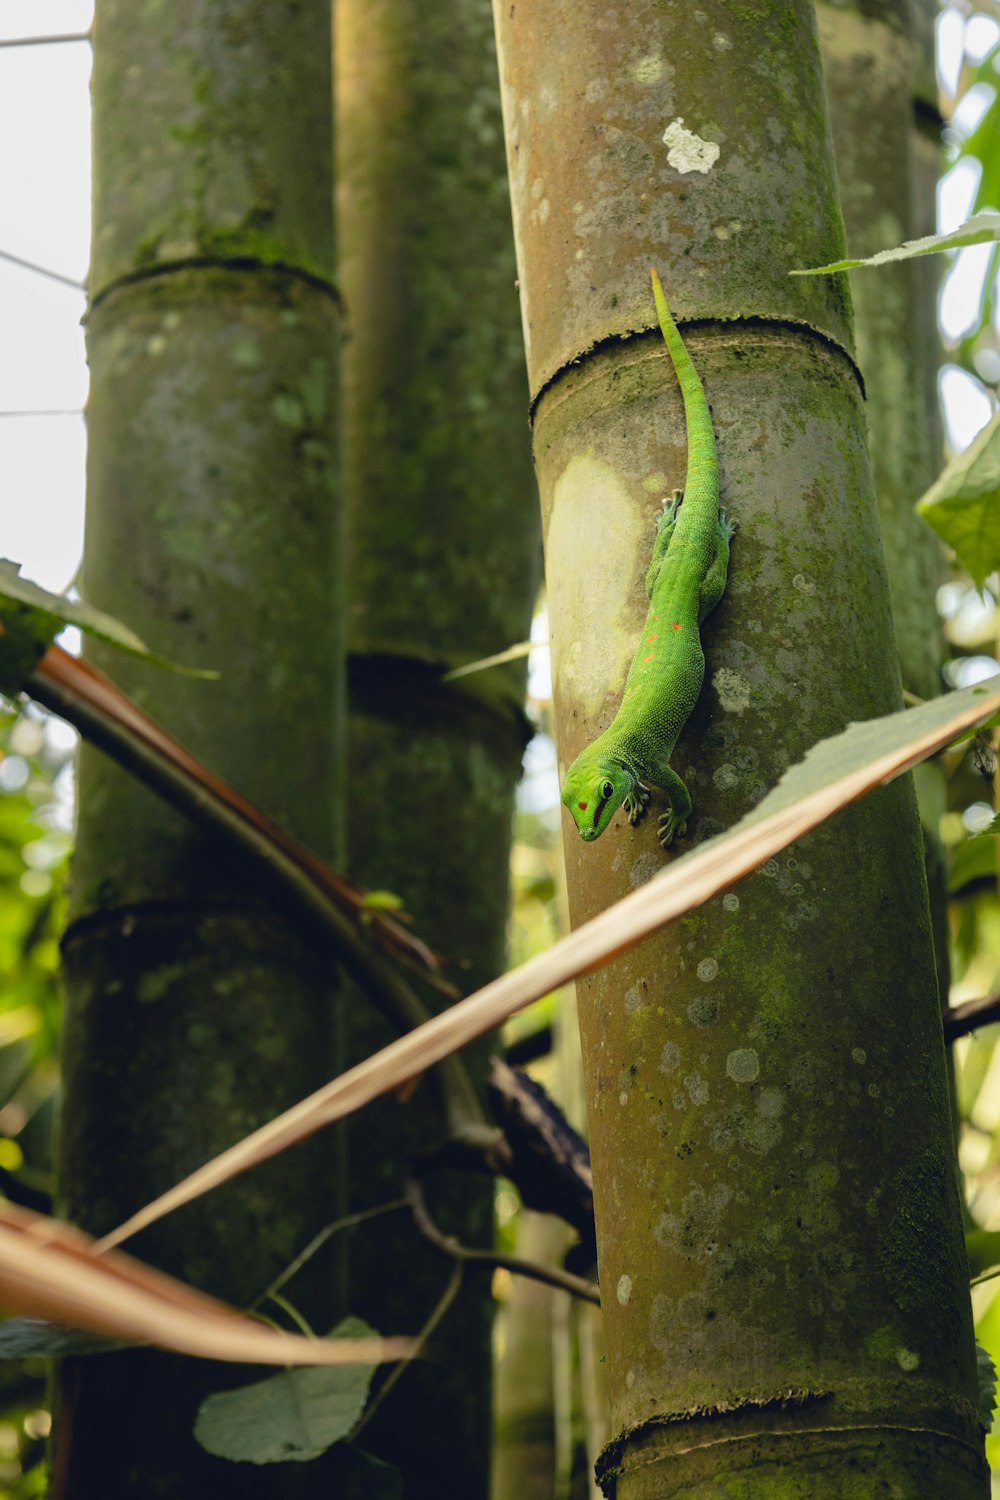 a green lizard climbing up the side of a tree